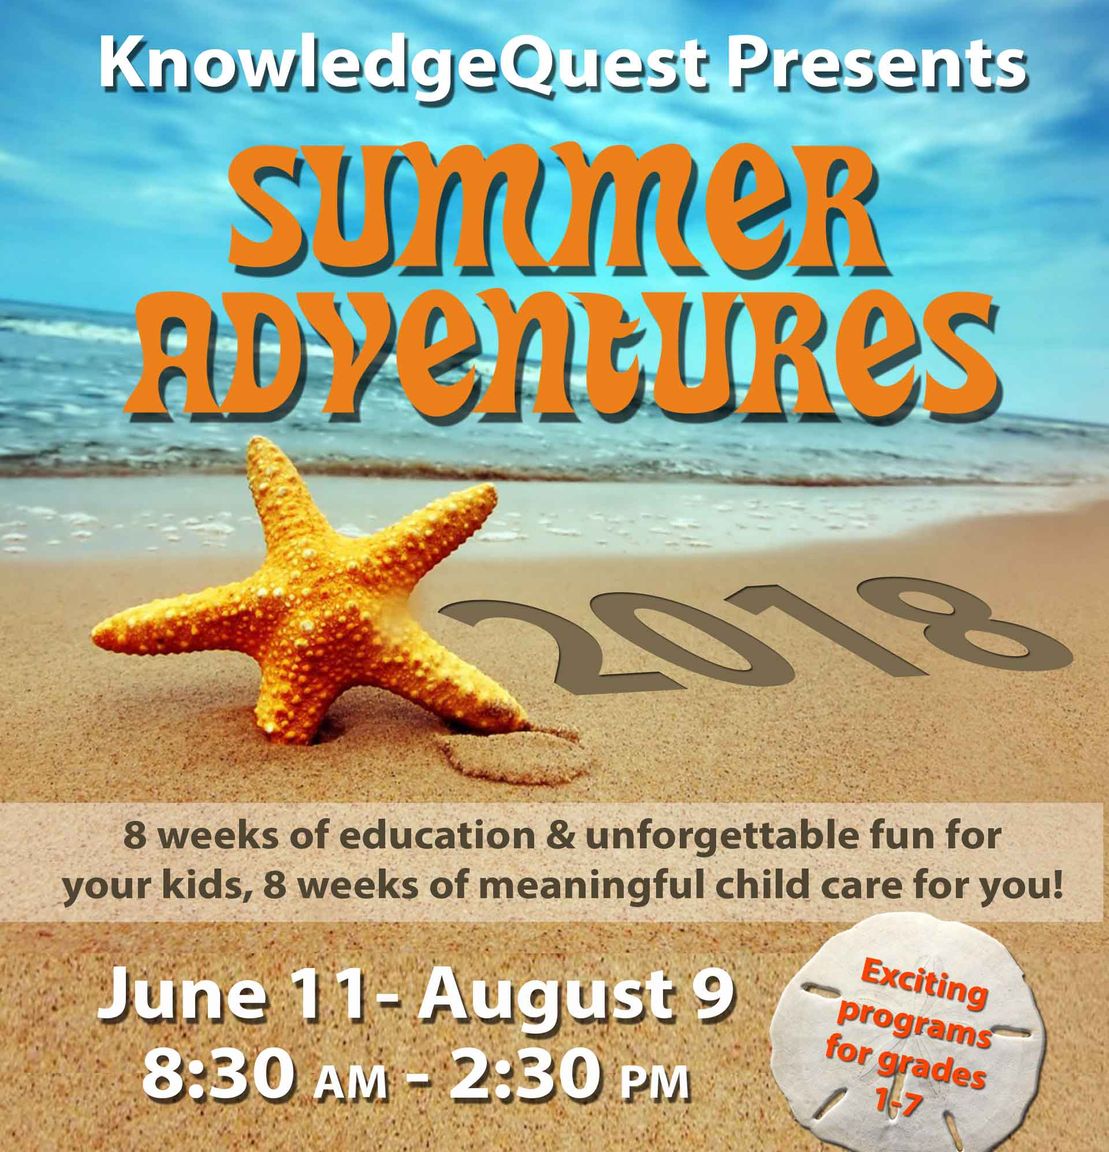 KnowledgeQuest Presents Summer Adventures 2018